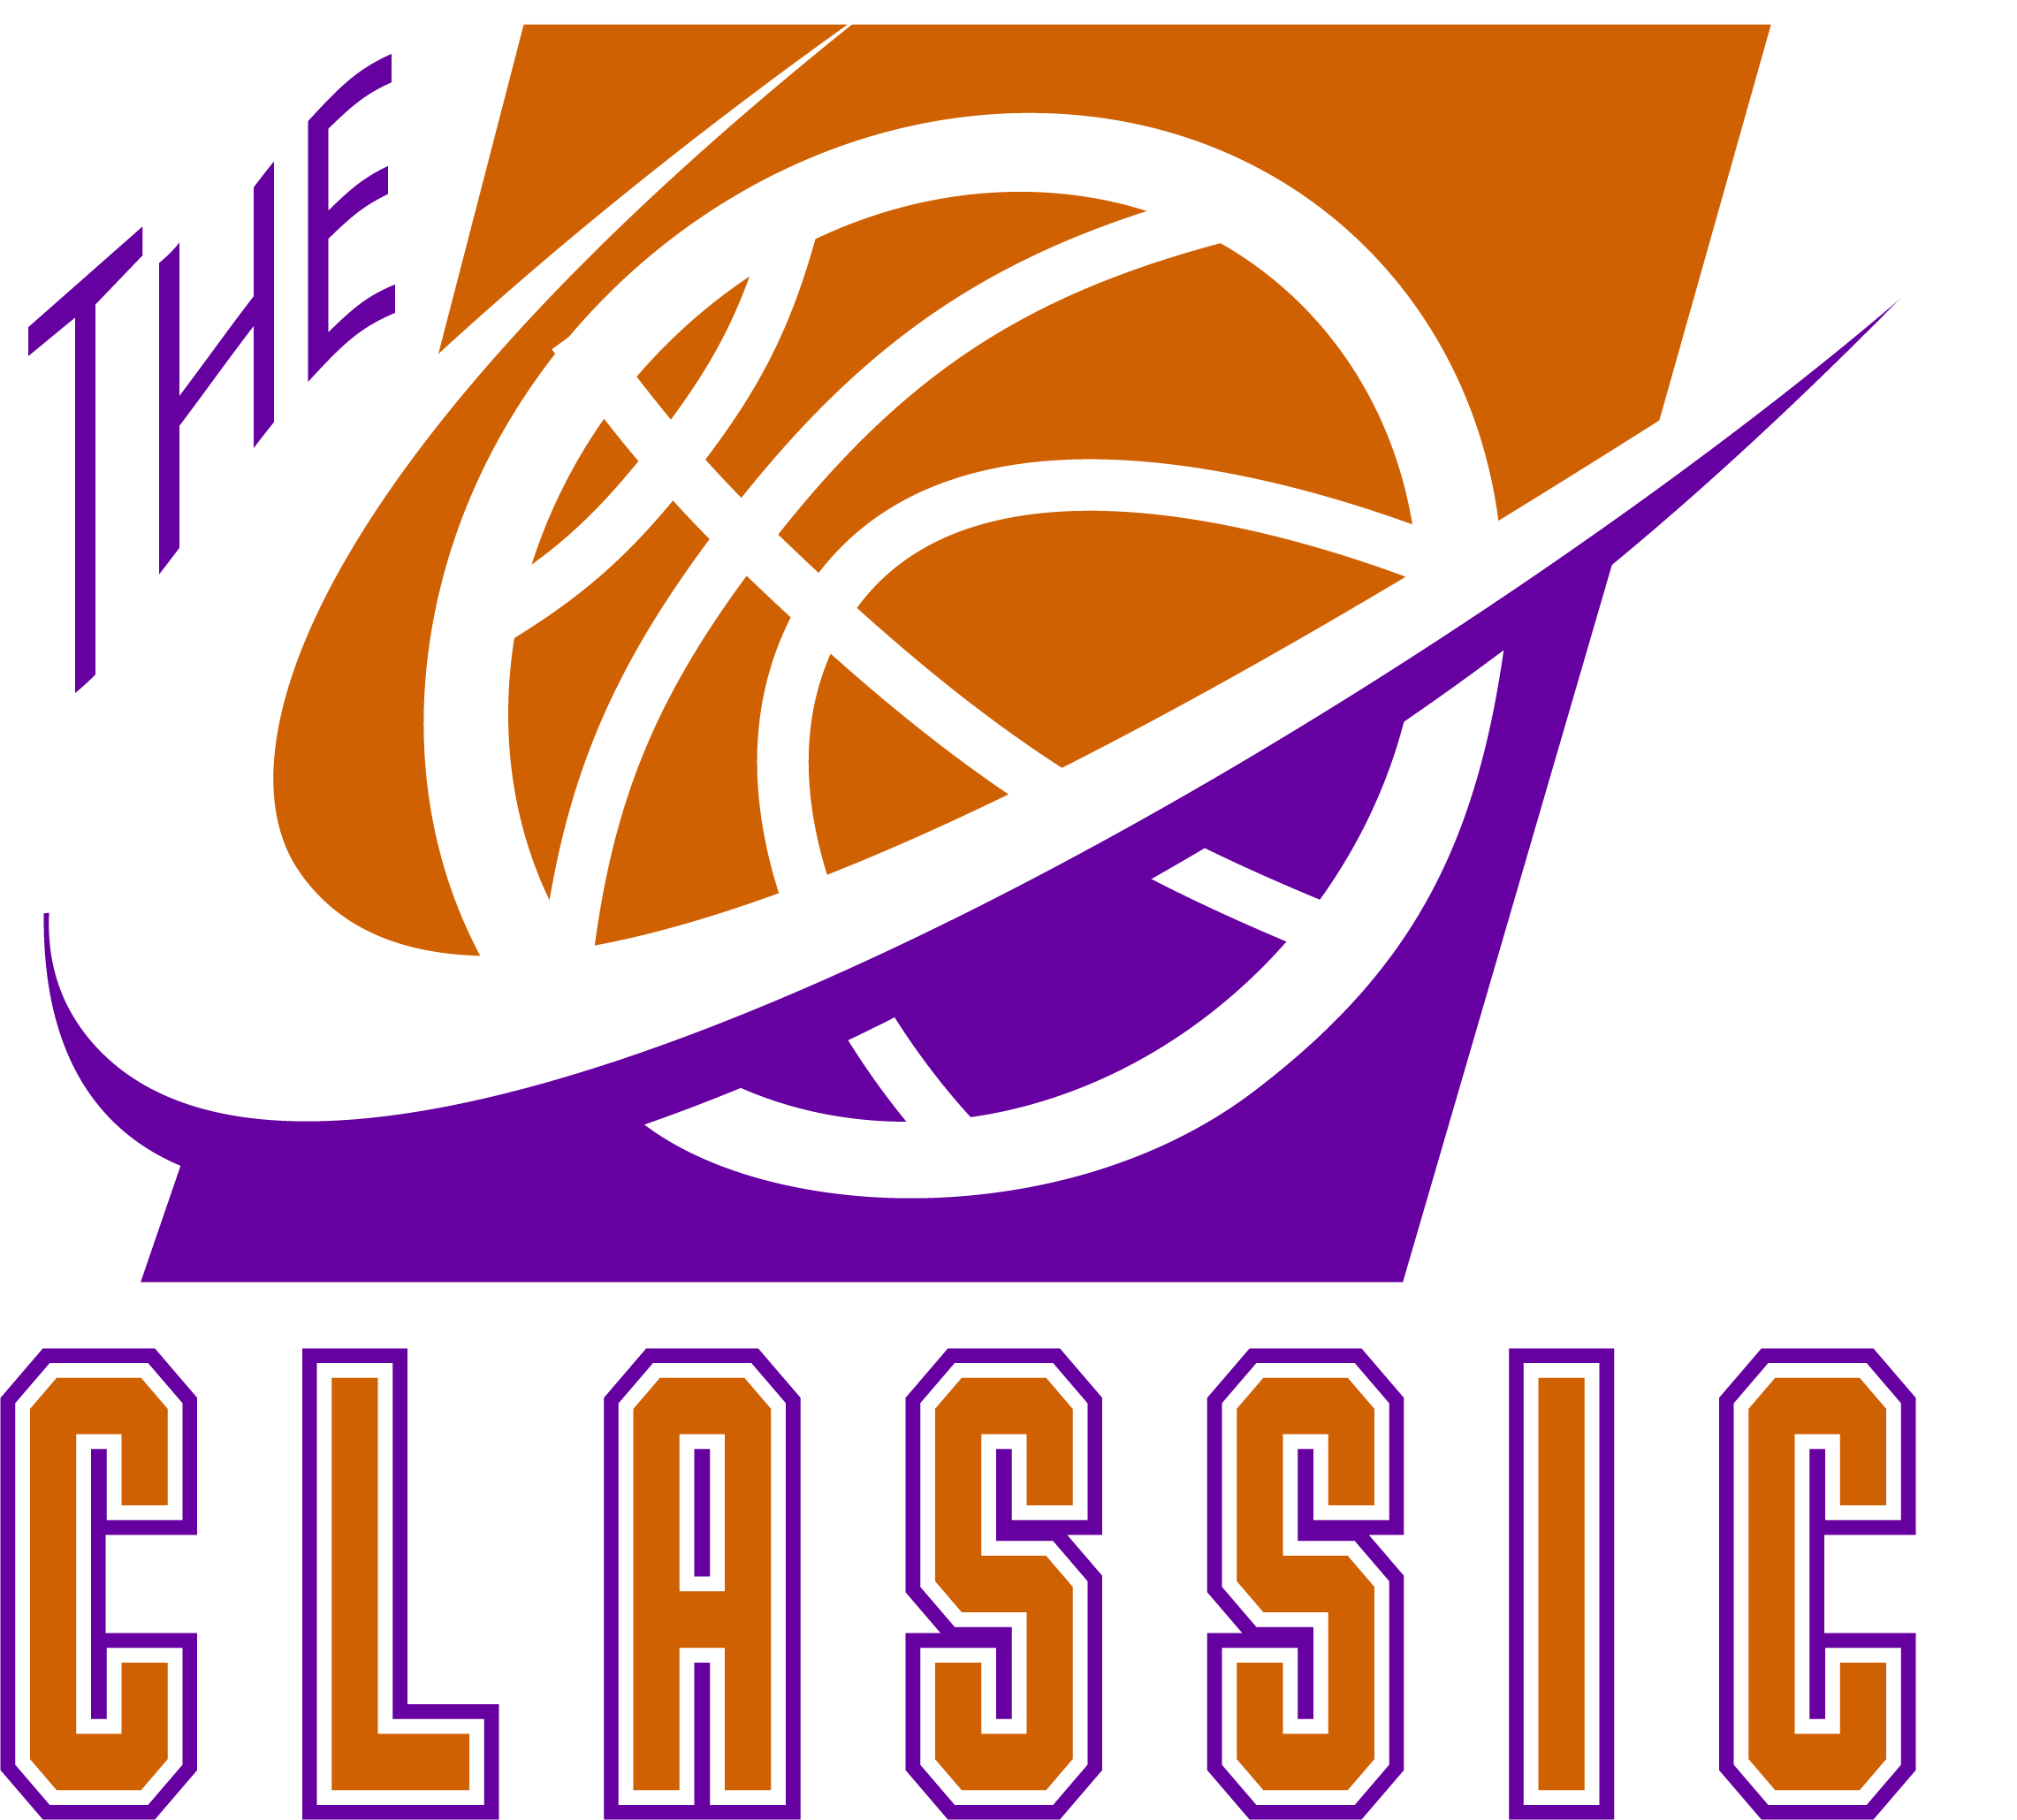 The-Classic-Logo